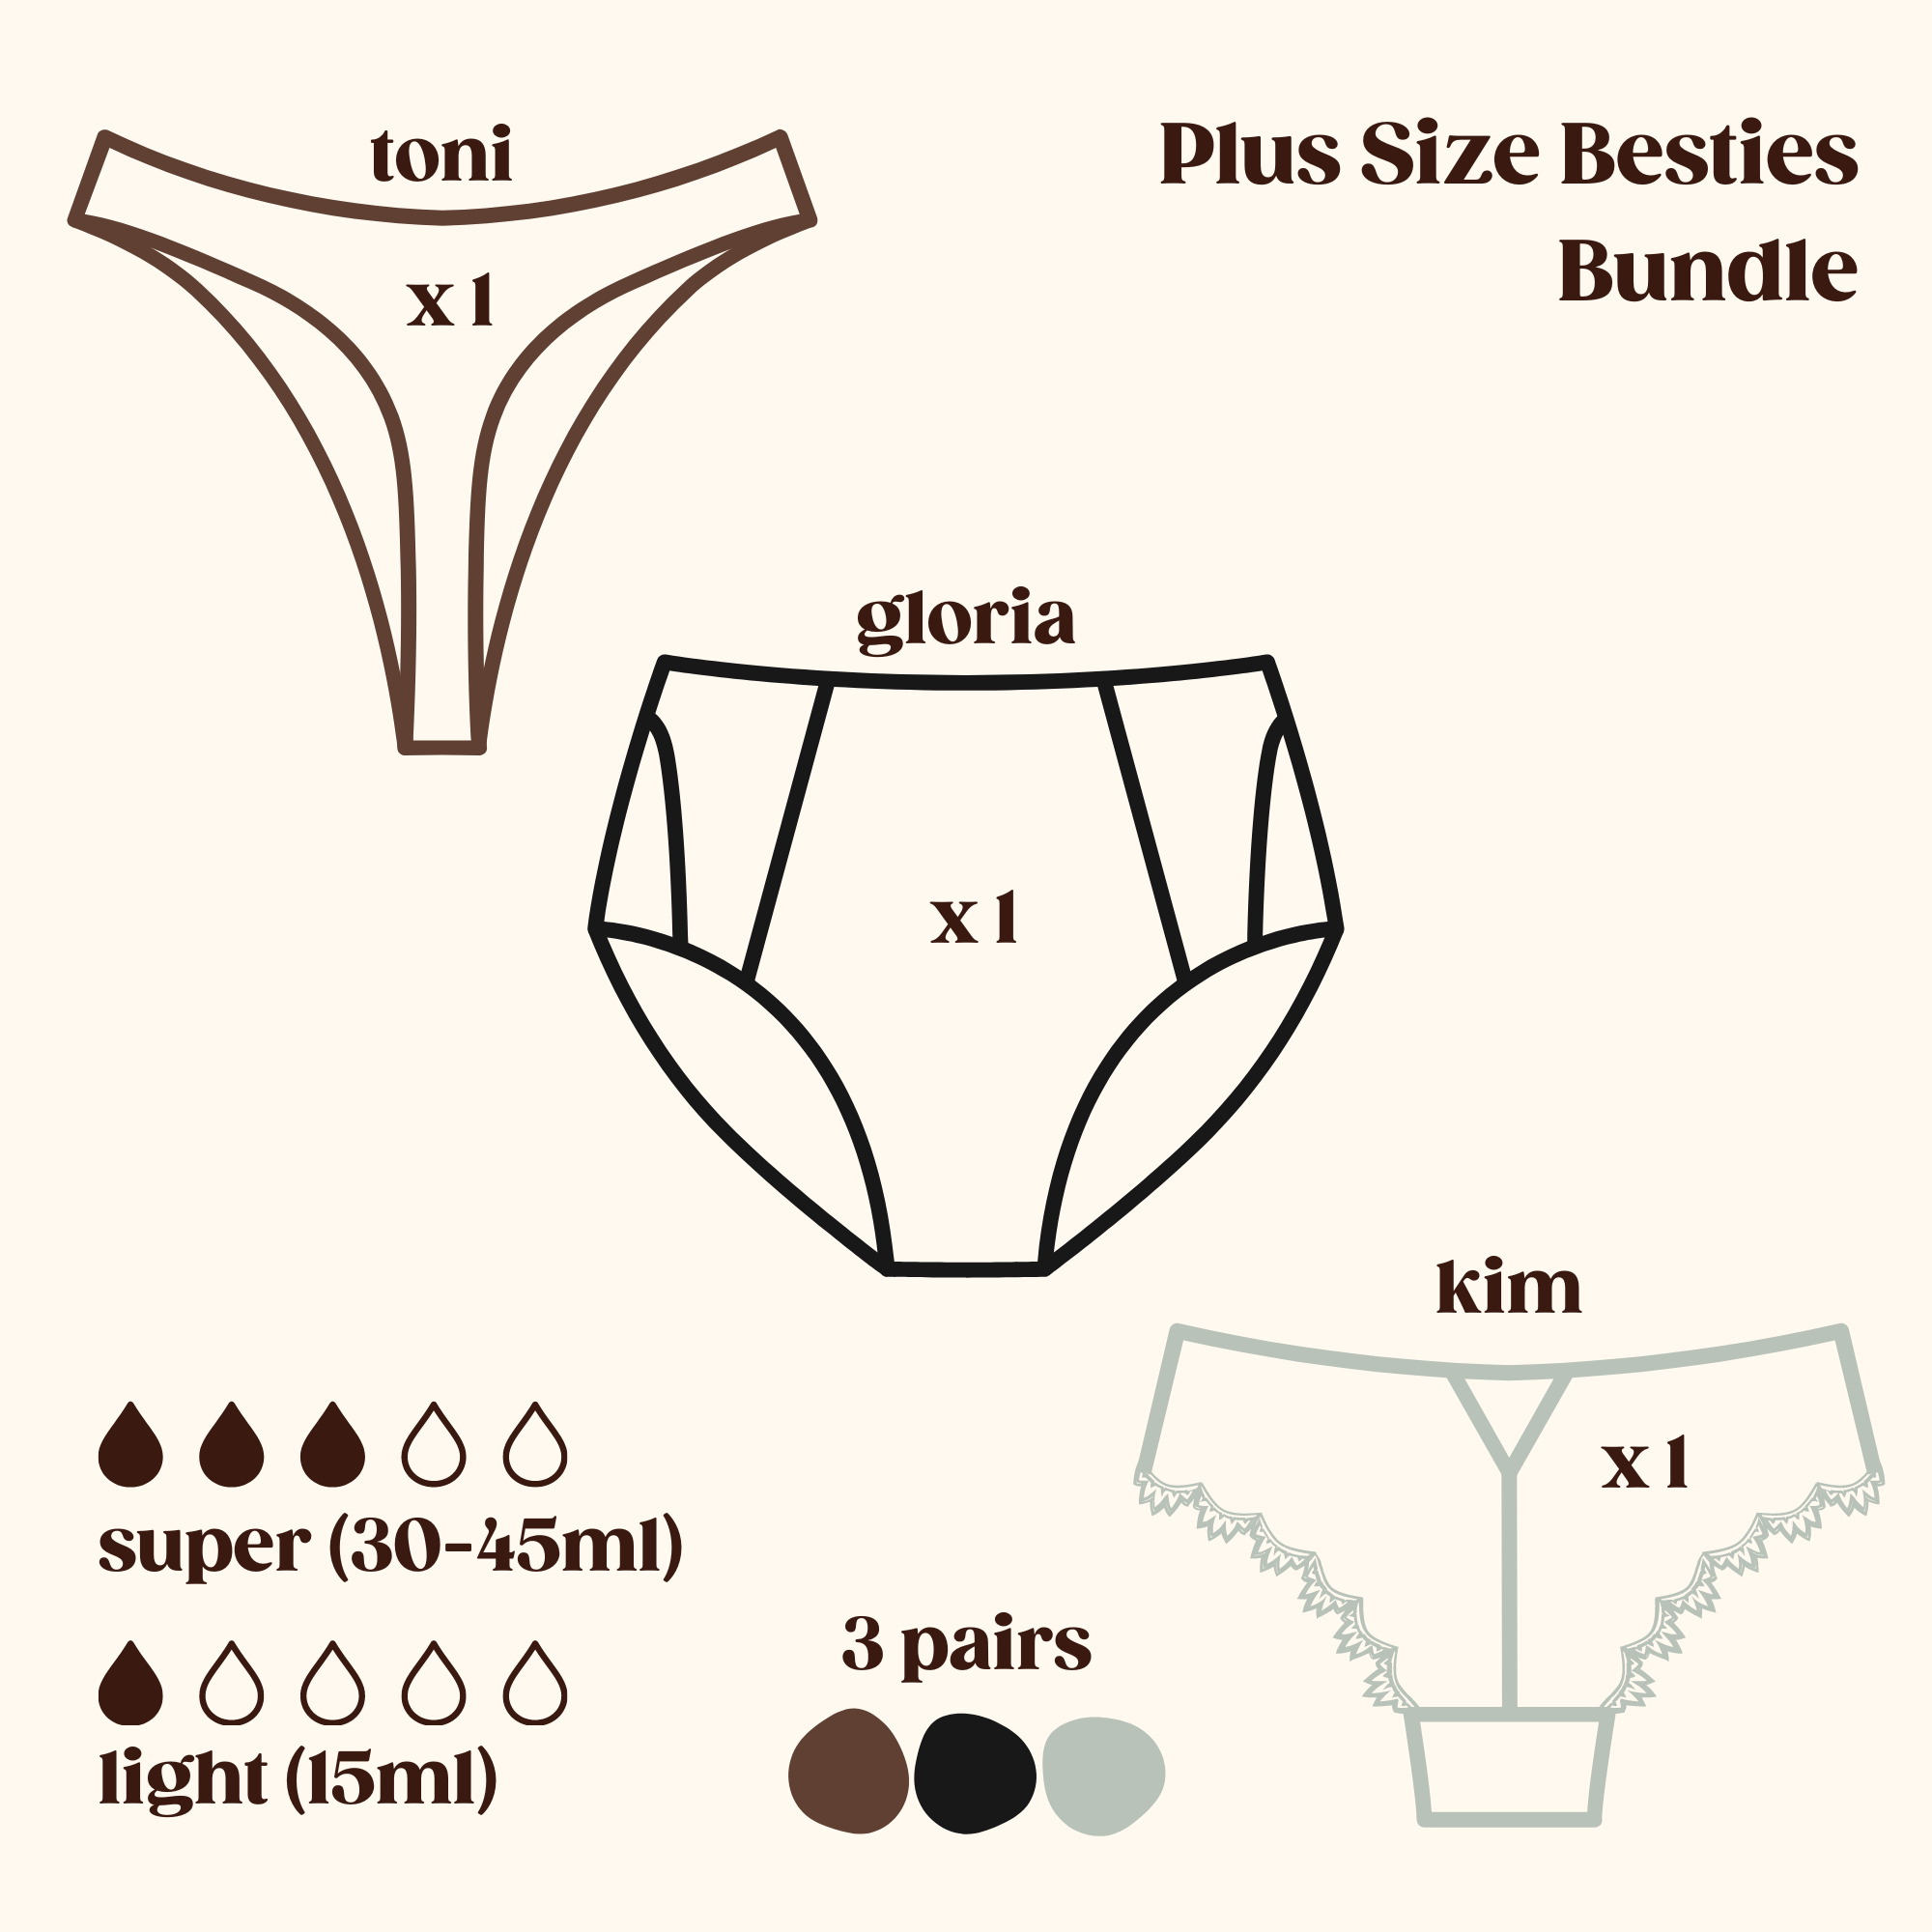 Plus Size Besties Bundle (Toni, Gloria, Kim)